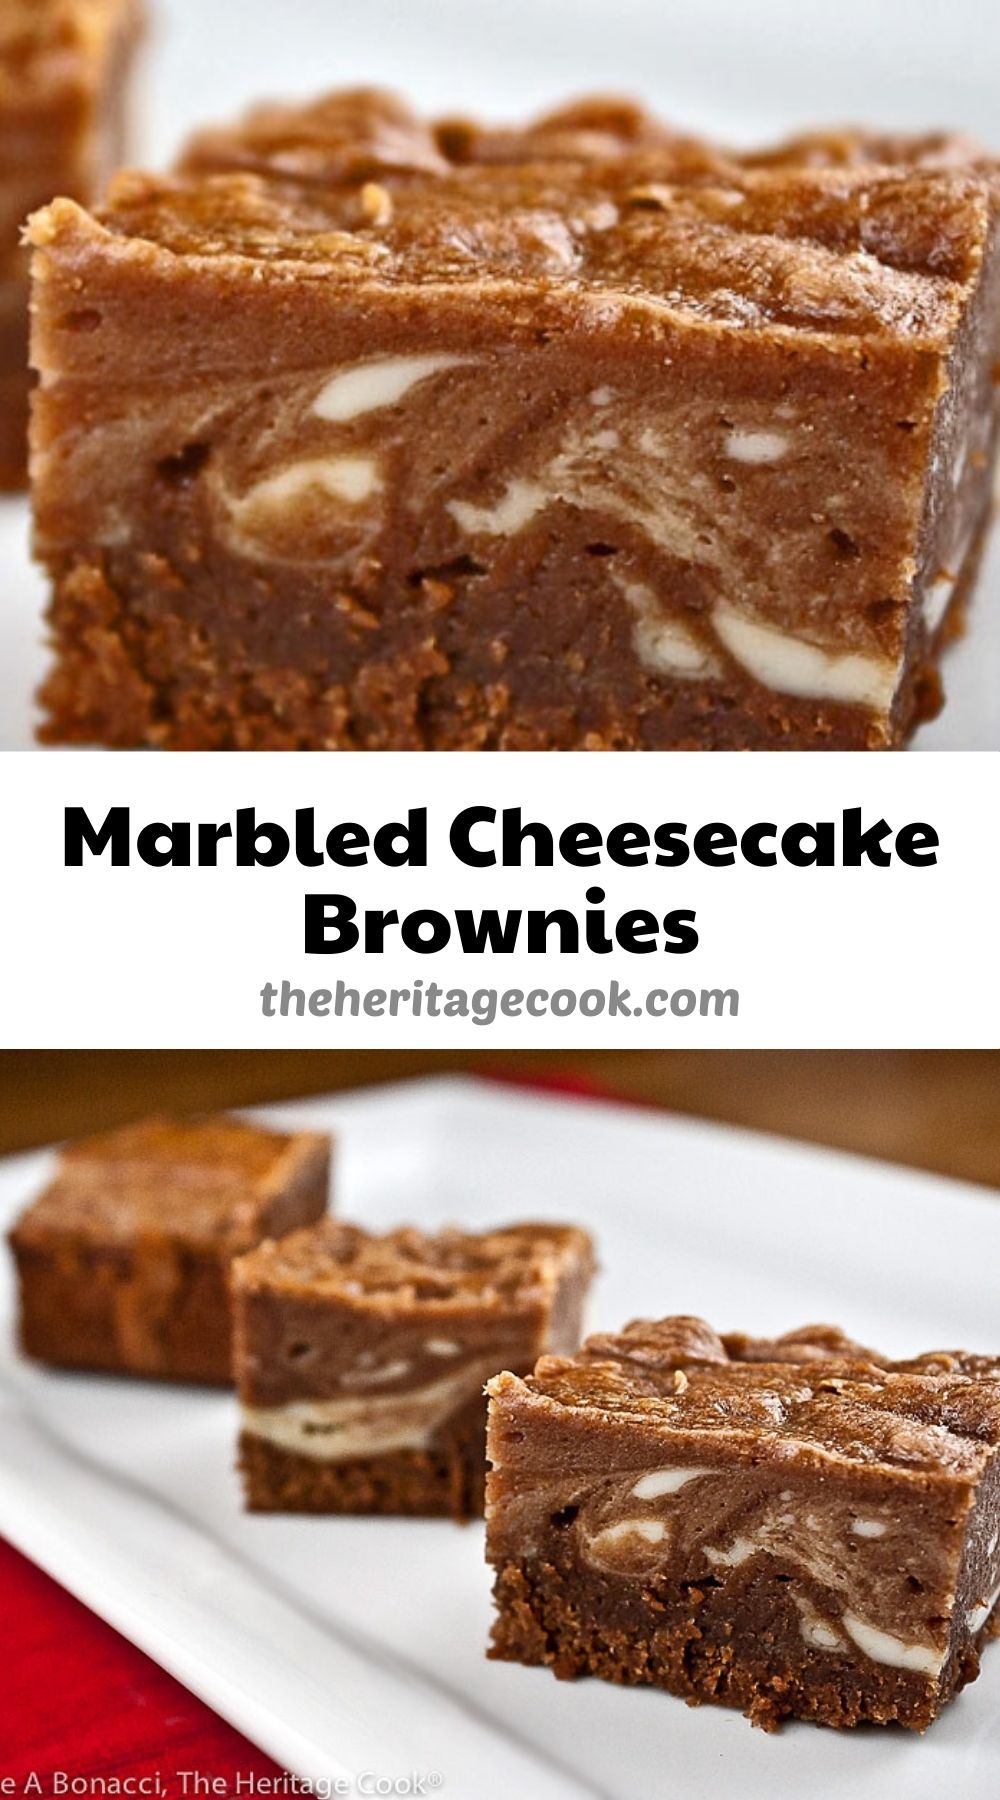 Marbled Cheesecake Brownies (GF) © 2021 Jane Bonacci, The Heritage Cook